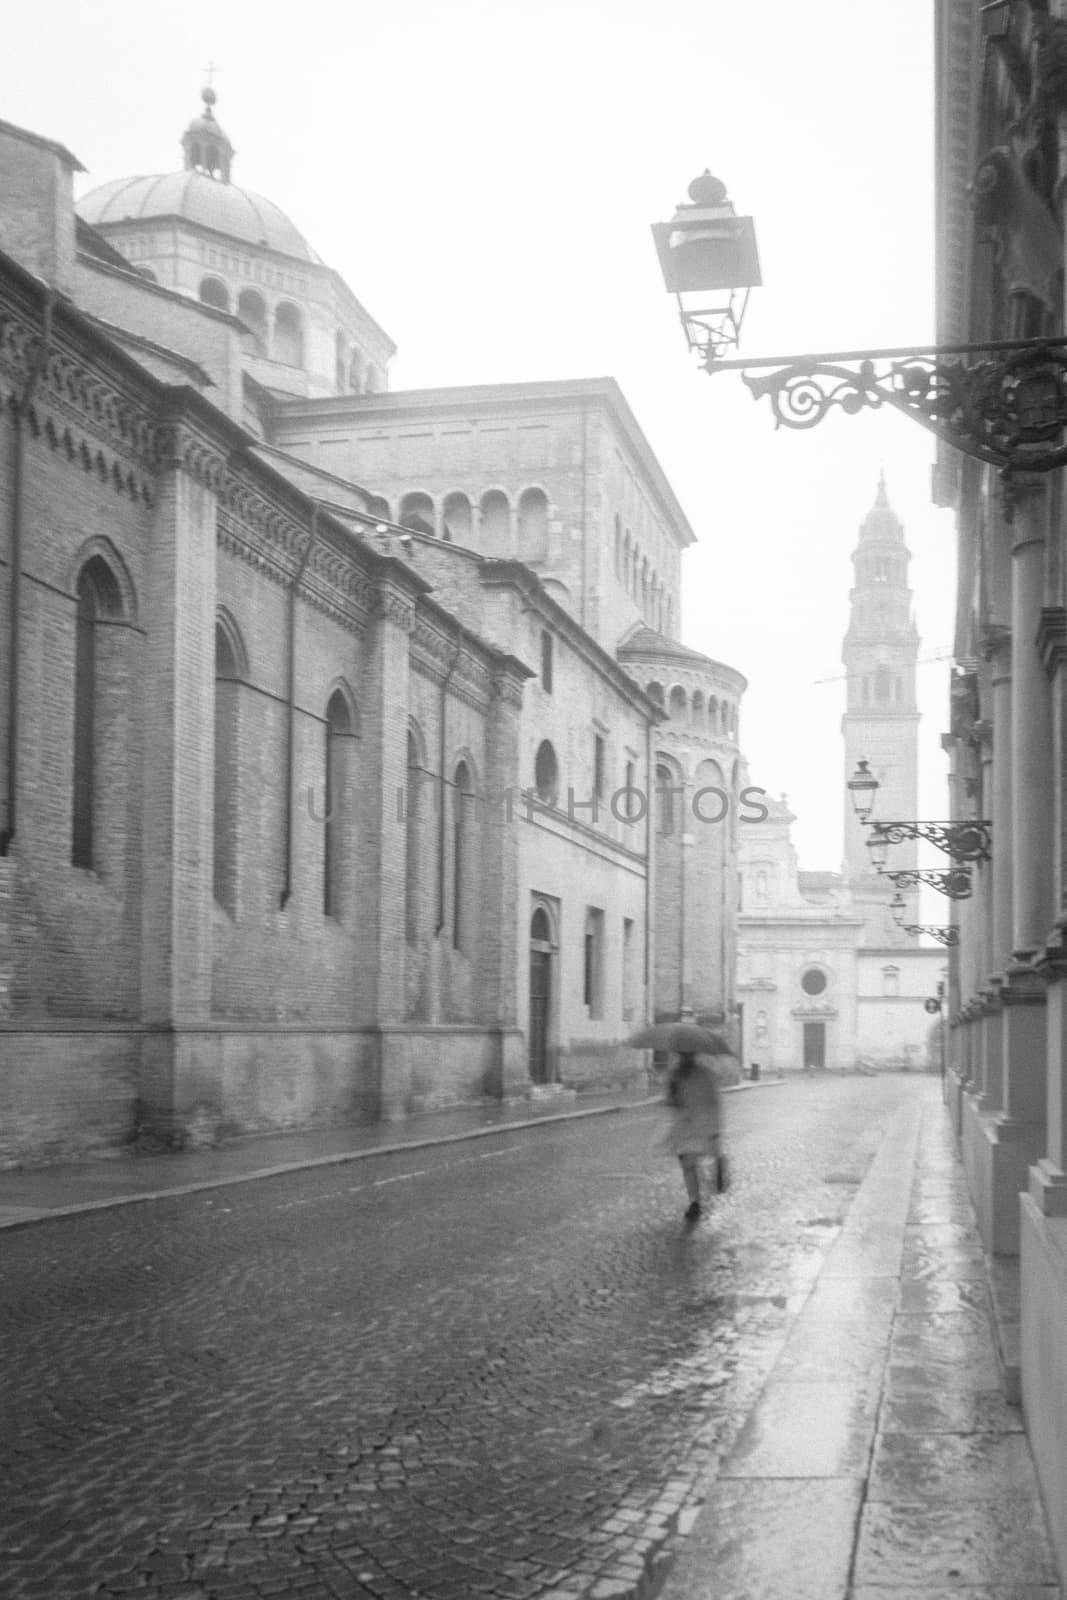 Street scene and the San Giovanni Evangelista church in Parma, Emilia-Romagna, Italy